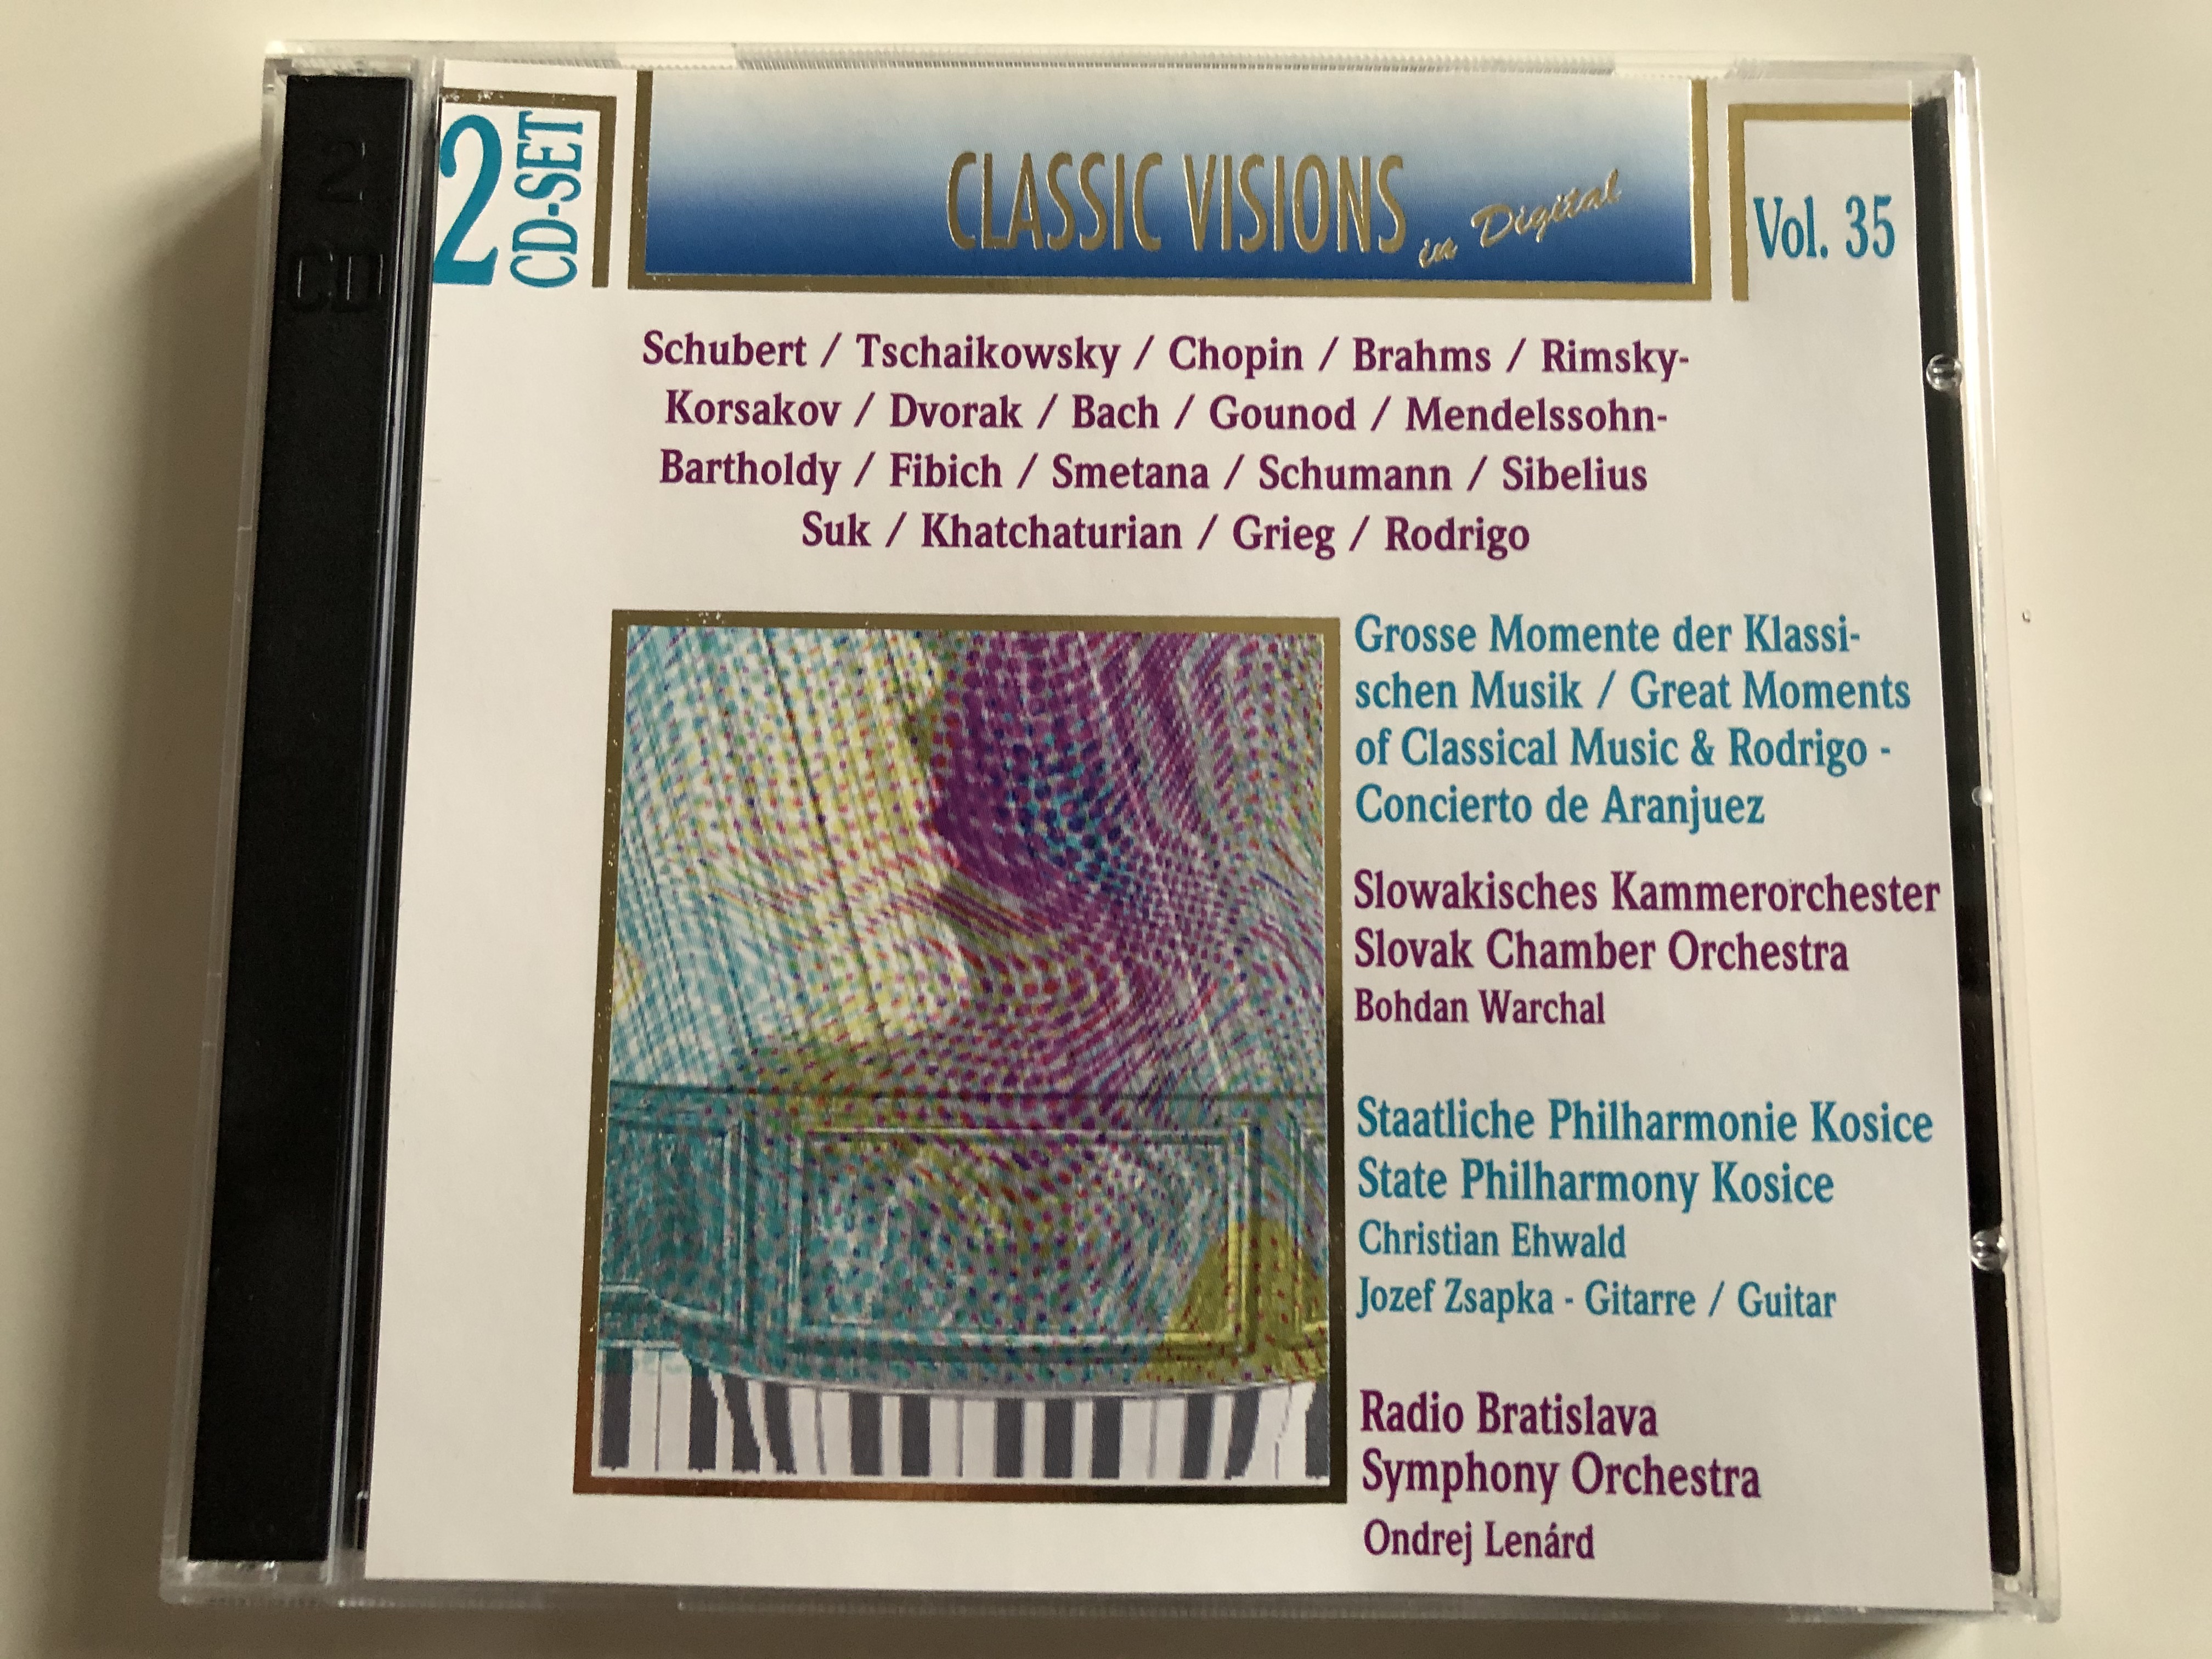 classic-visions-in-digital-vol.-35-schubert-tschaikowsky-chopin-brahms-rimsky-korsakov-dvorak-bach-gounod-slovak-chamber-orchestra-state-philharmony-kosice-radio-bratislava-symphony-orc-1-.jpg